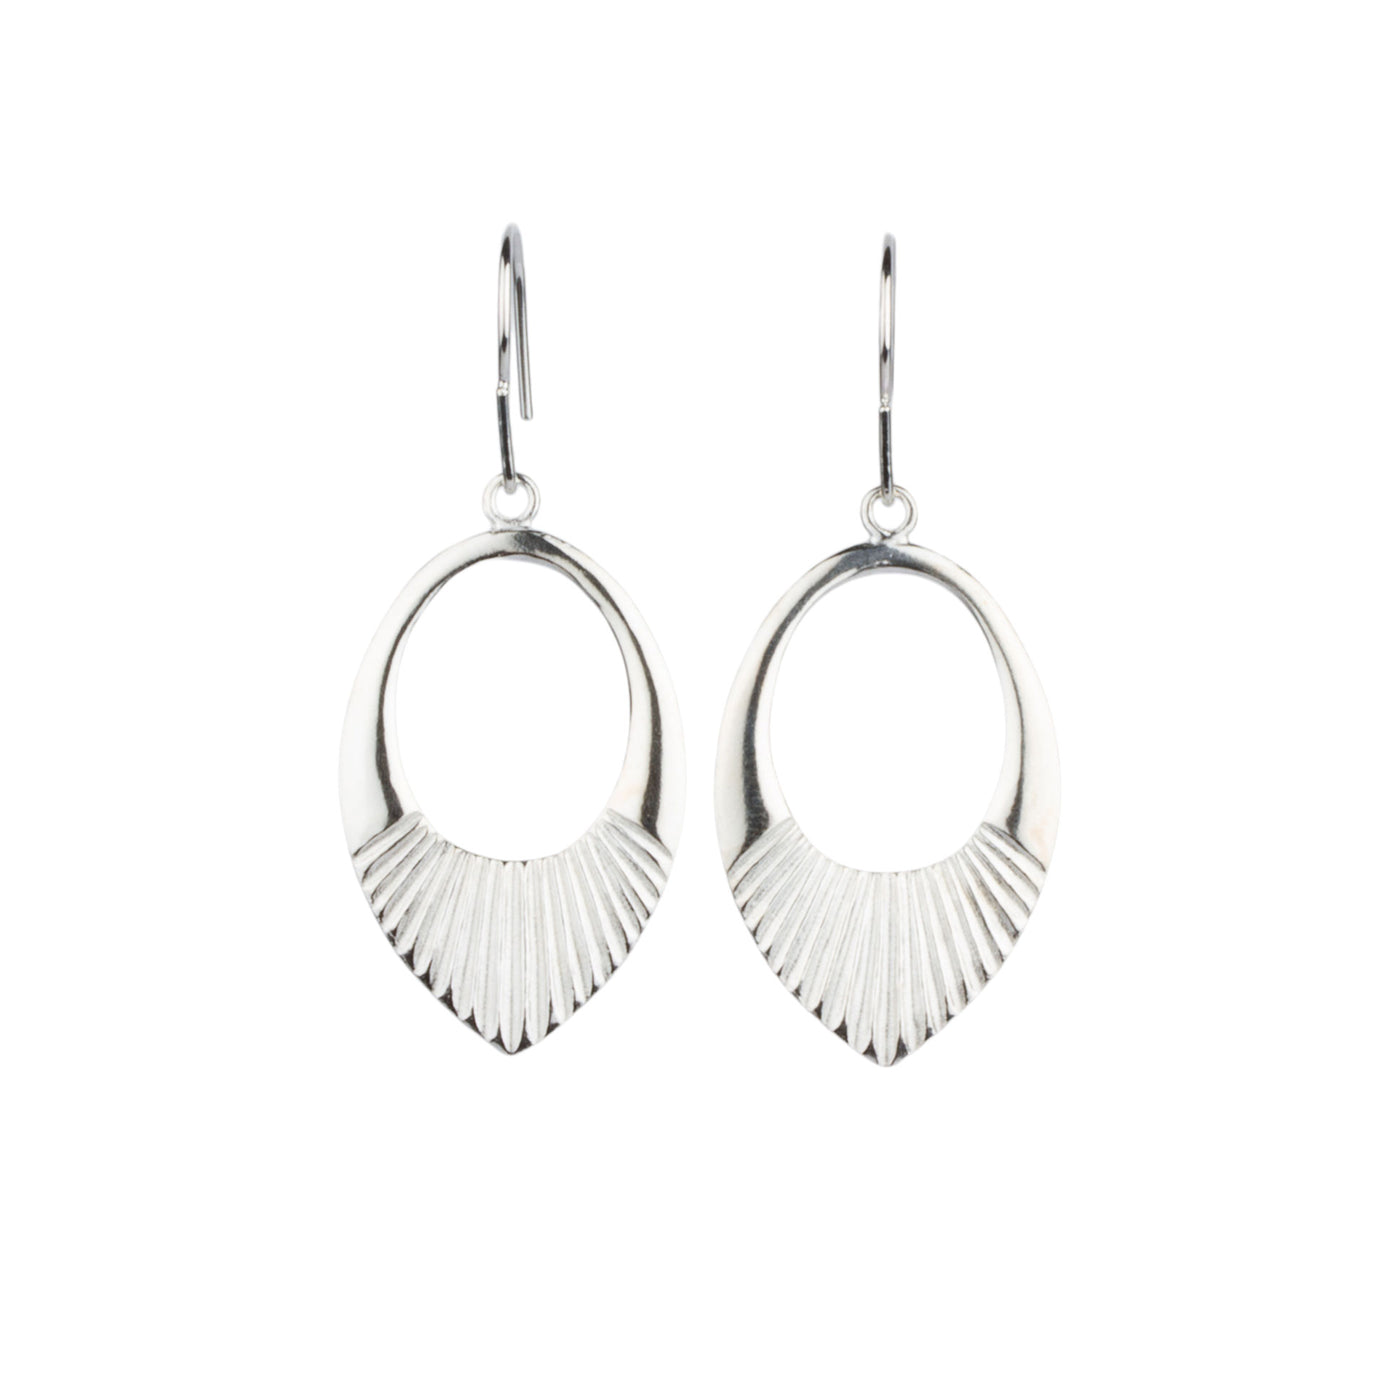 Silver Medium open petal shape earrings with textured bottoms